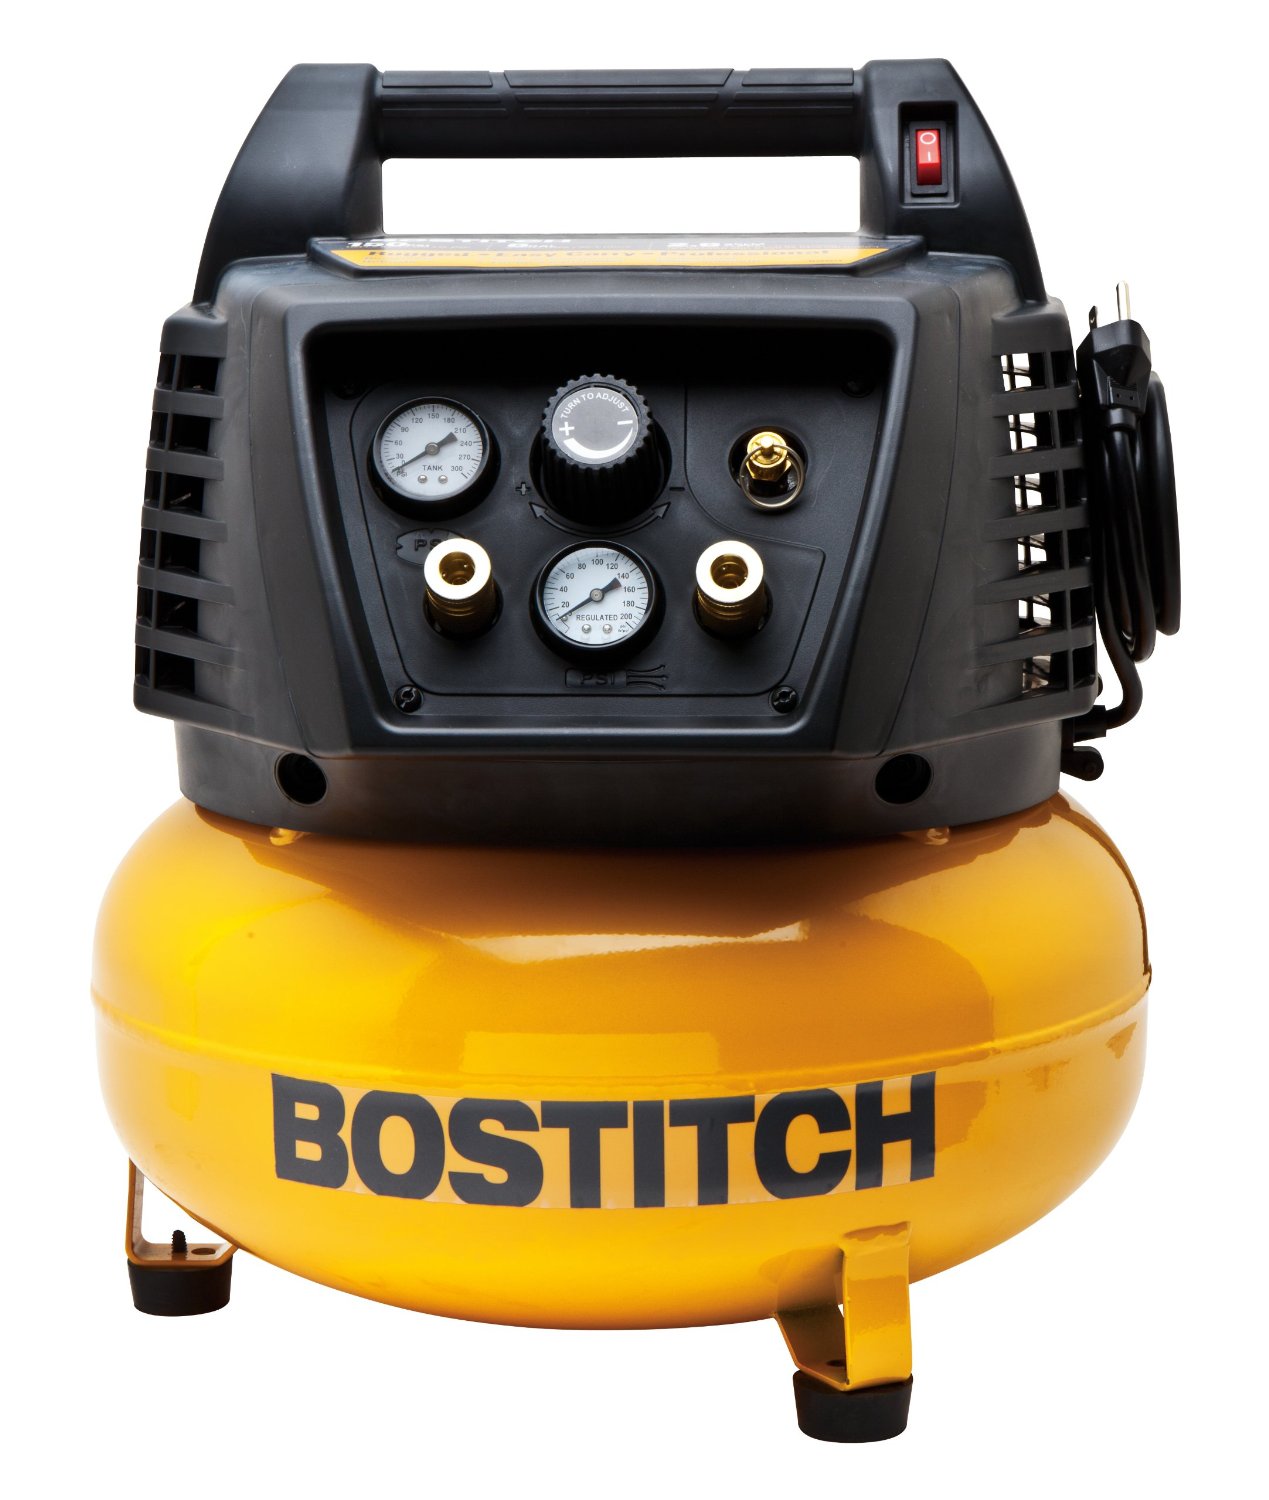 Bostitch Pancake Air Compressor Review